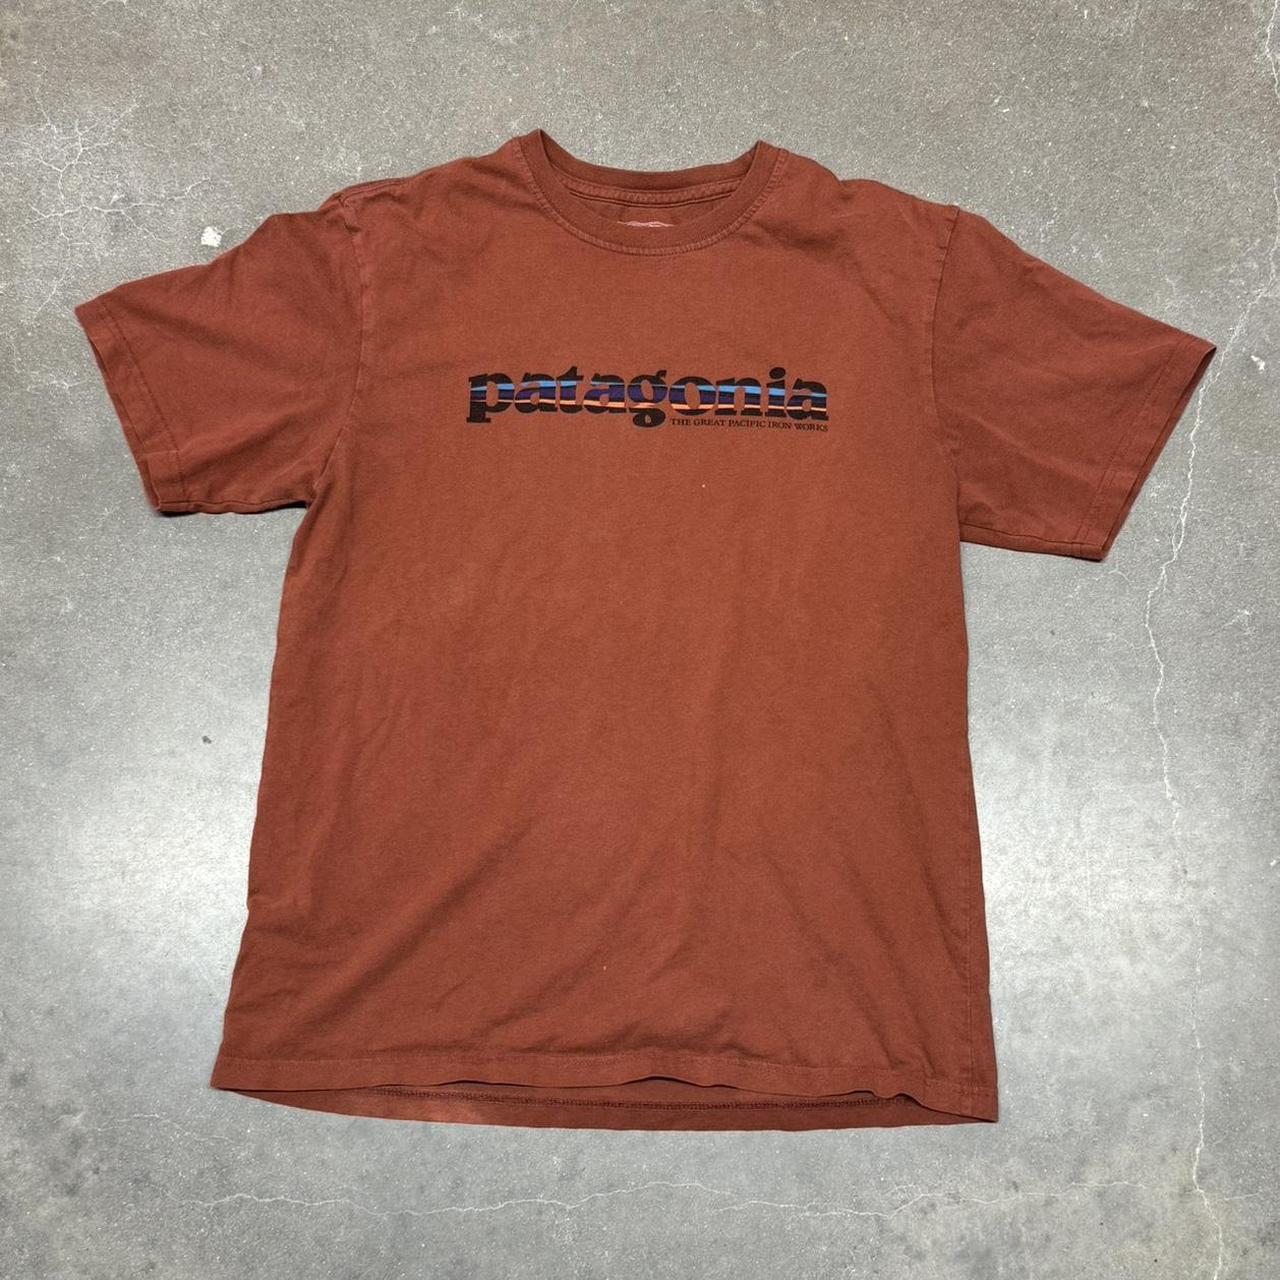 Vintage Patagonia T shirt, Size M (measurements